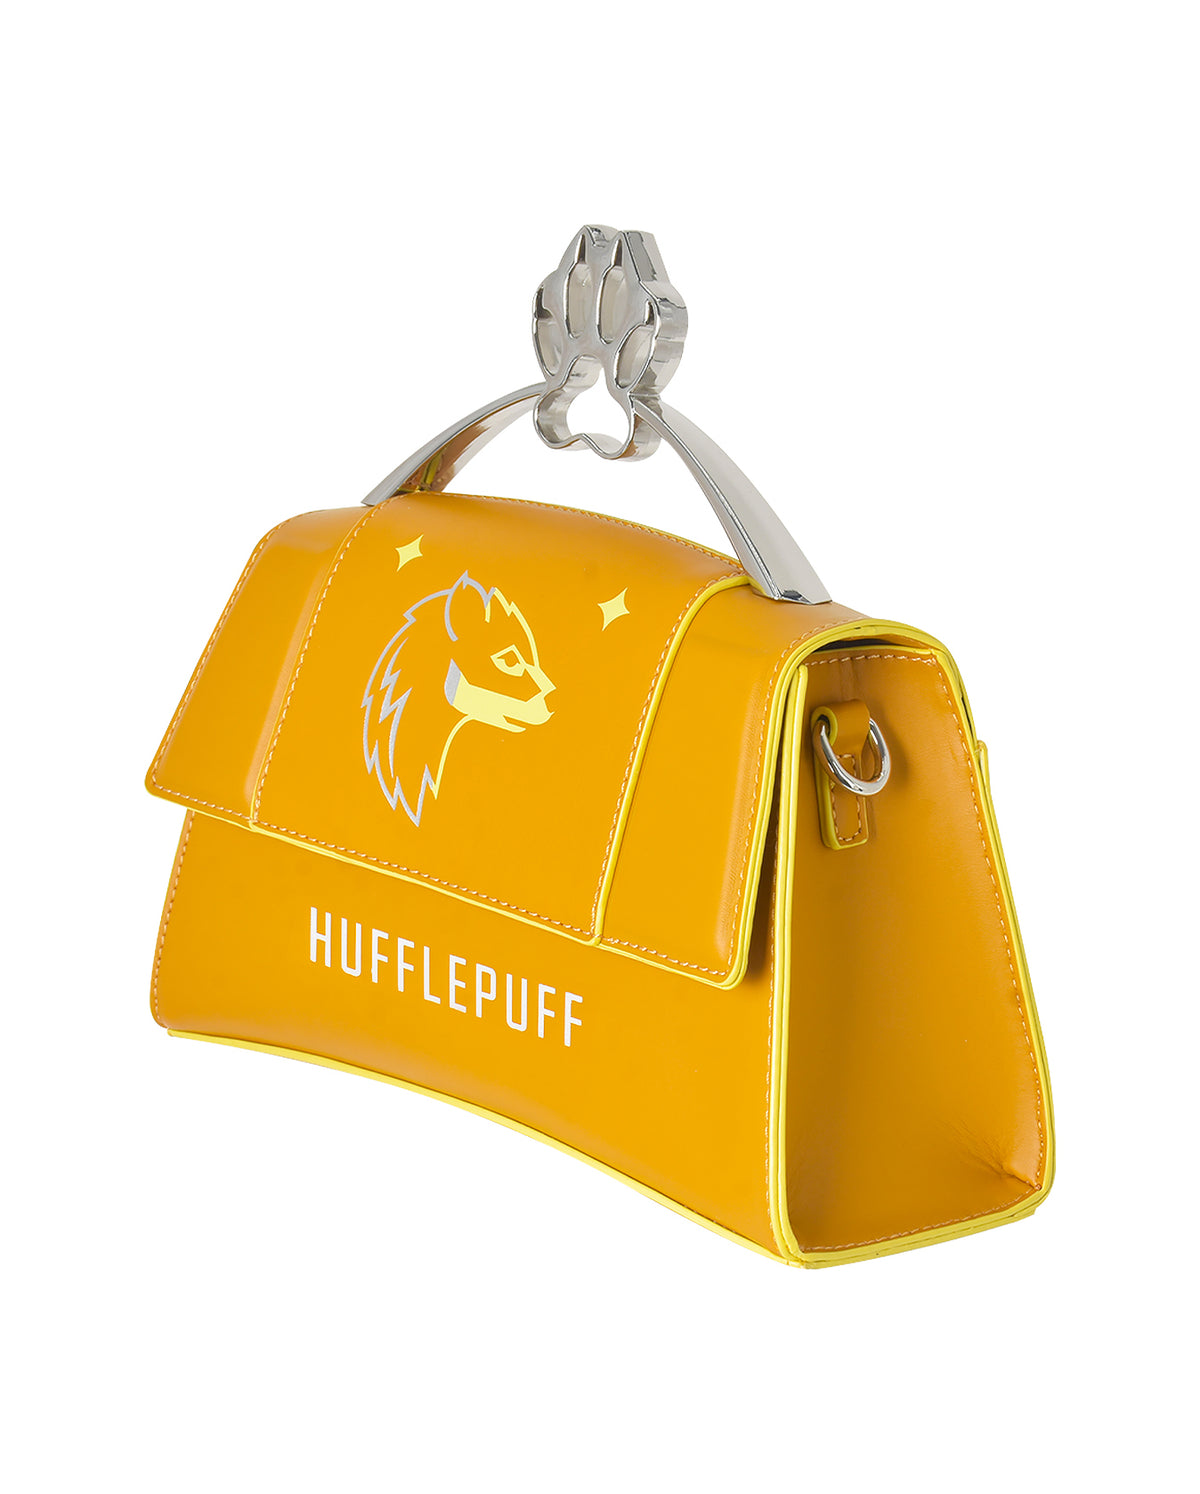 Hufflepuff House Mascot Satchel